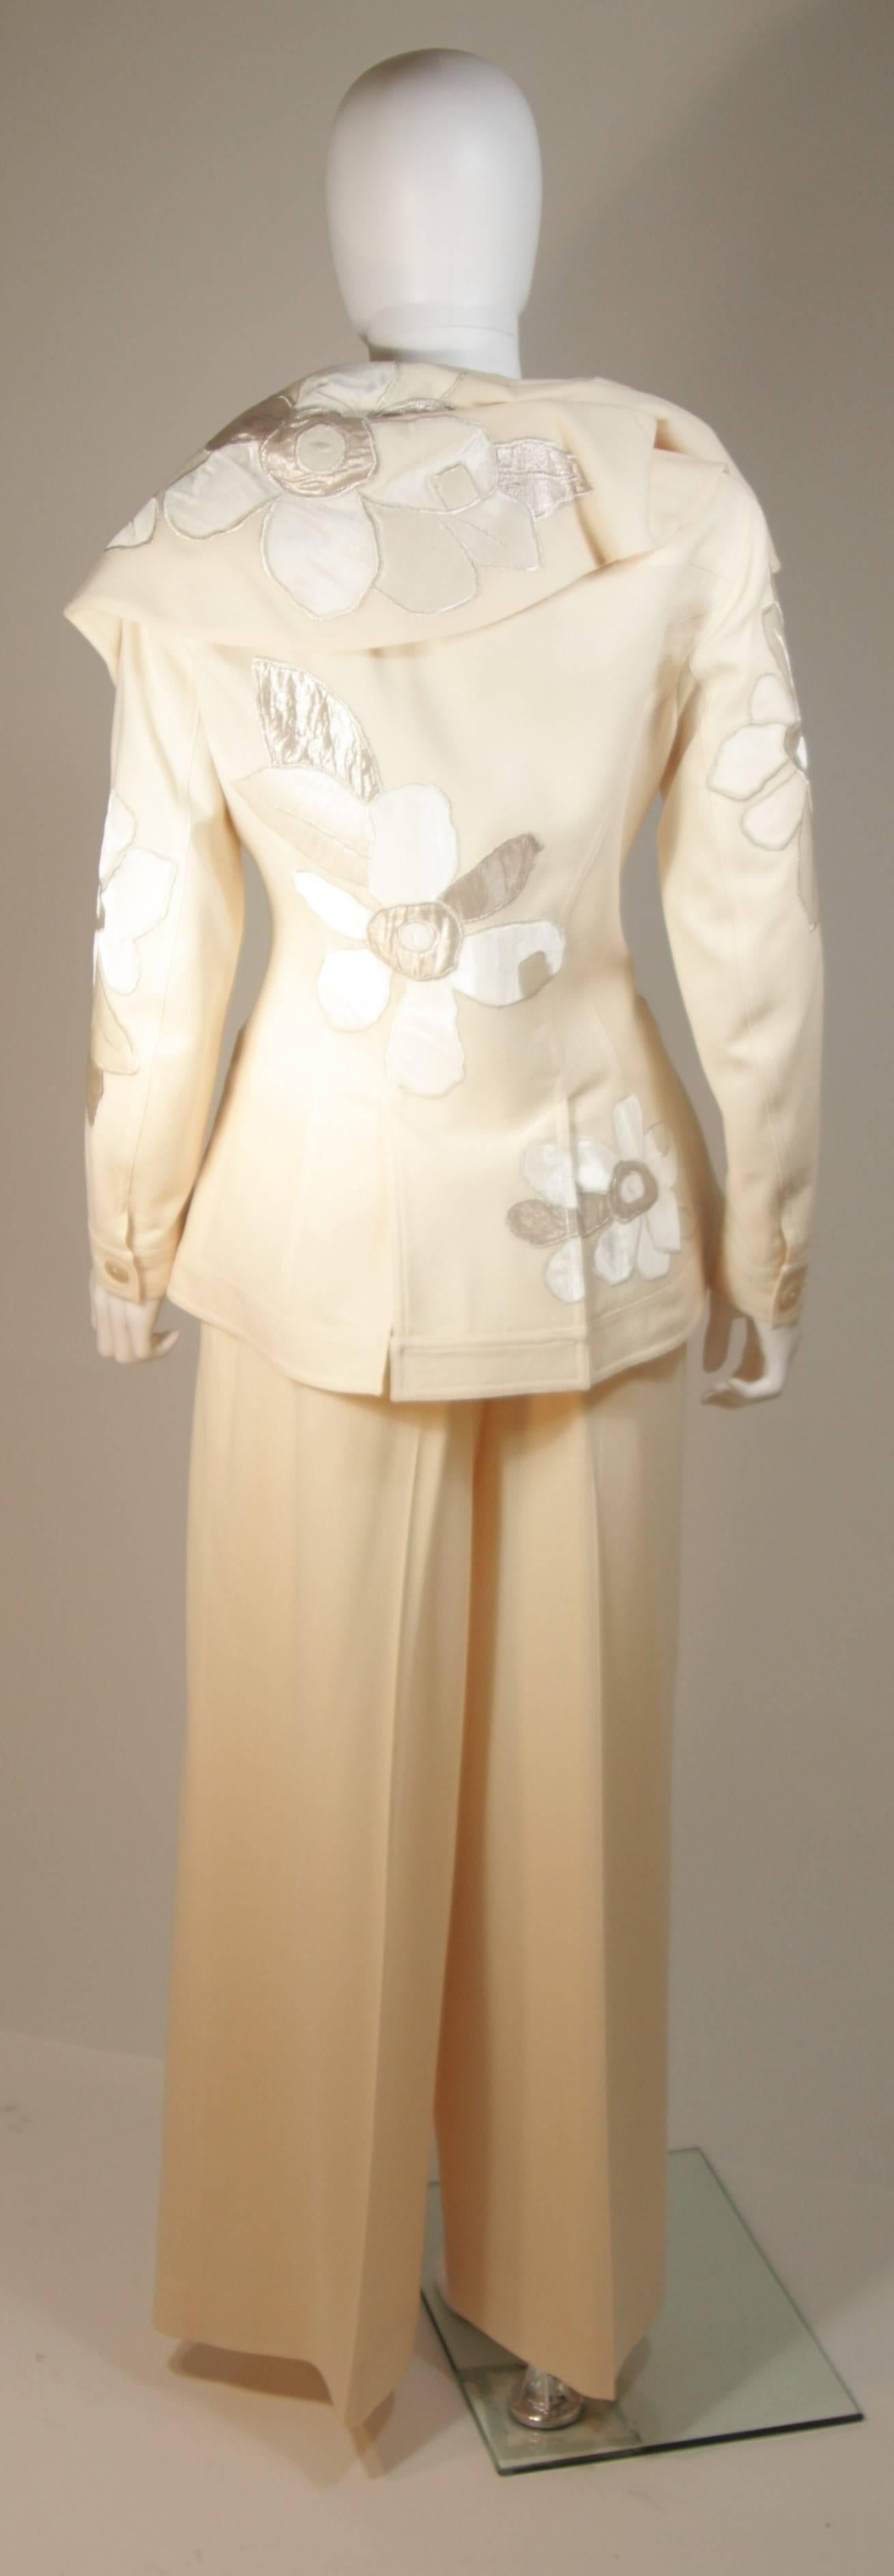 JOHN GALLIANO Ivory Silk Pant Suit with Metallic Applique Size 44 42 2